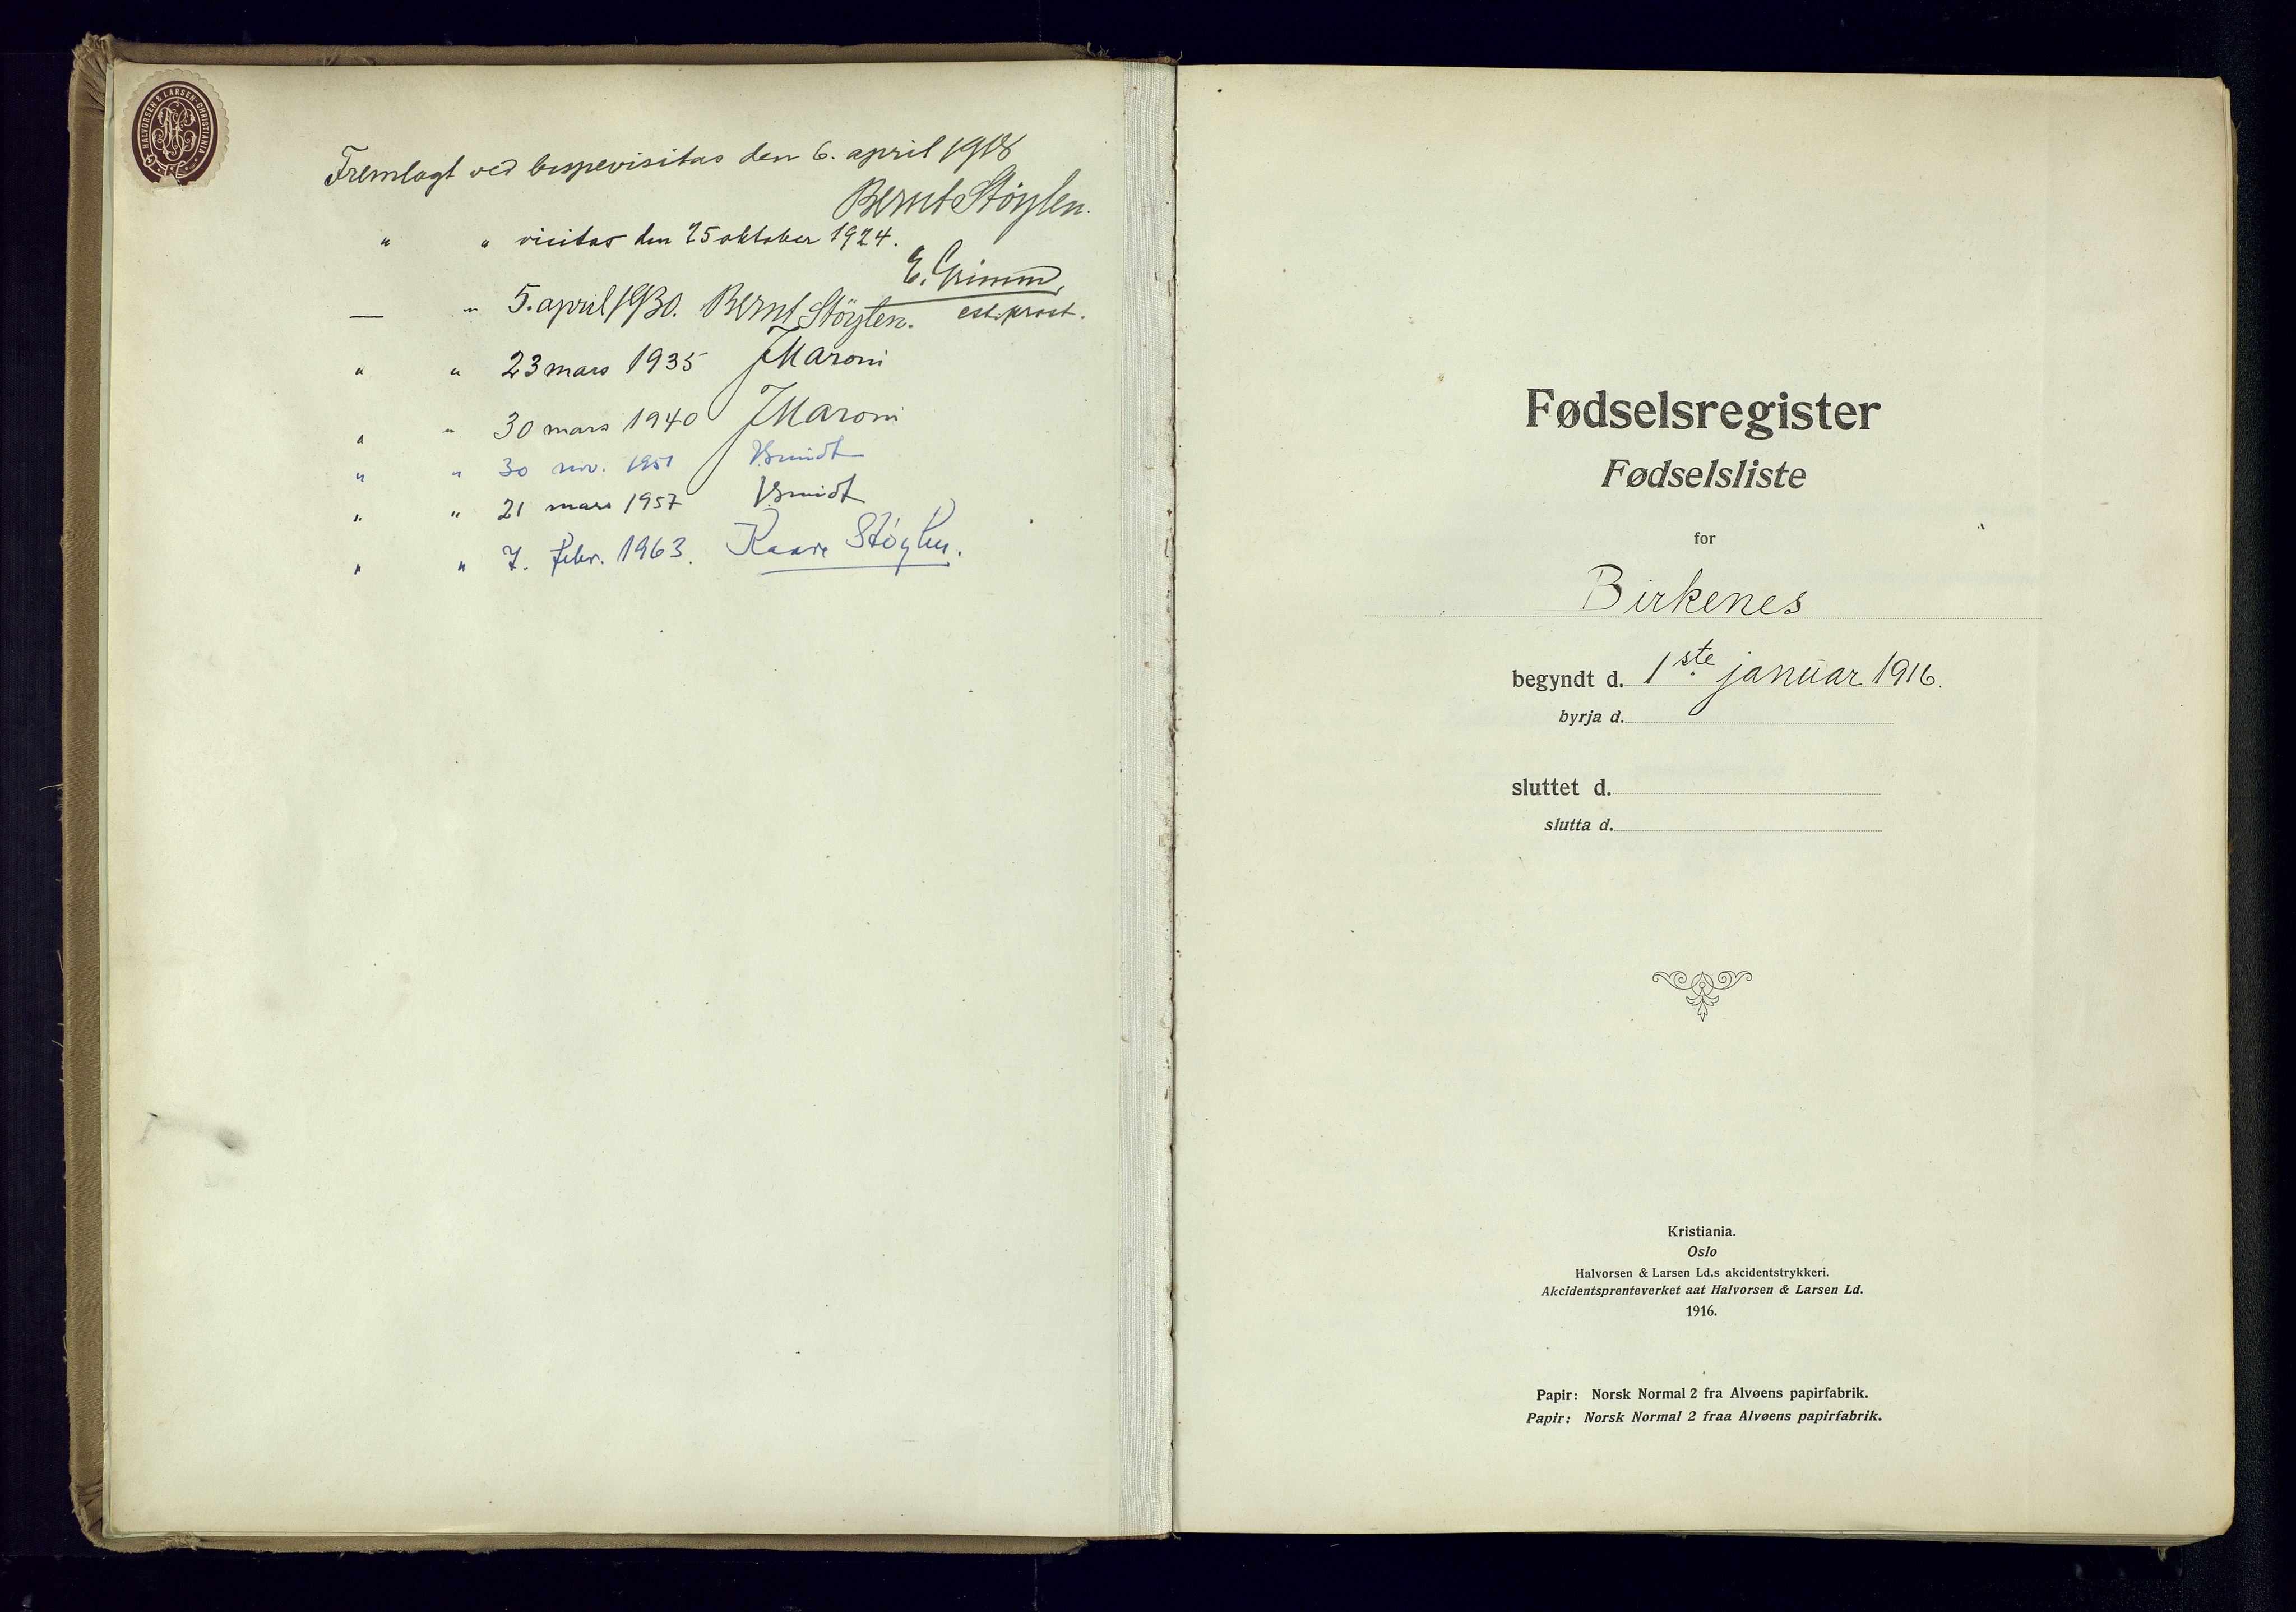 Birkenes sokneprestkontor, SAK/1111-0004/J/Ja/L0001: Fødselsregister nr. II.6.4, 1916-1962